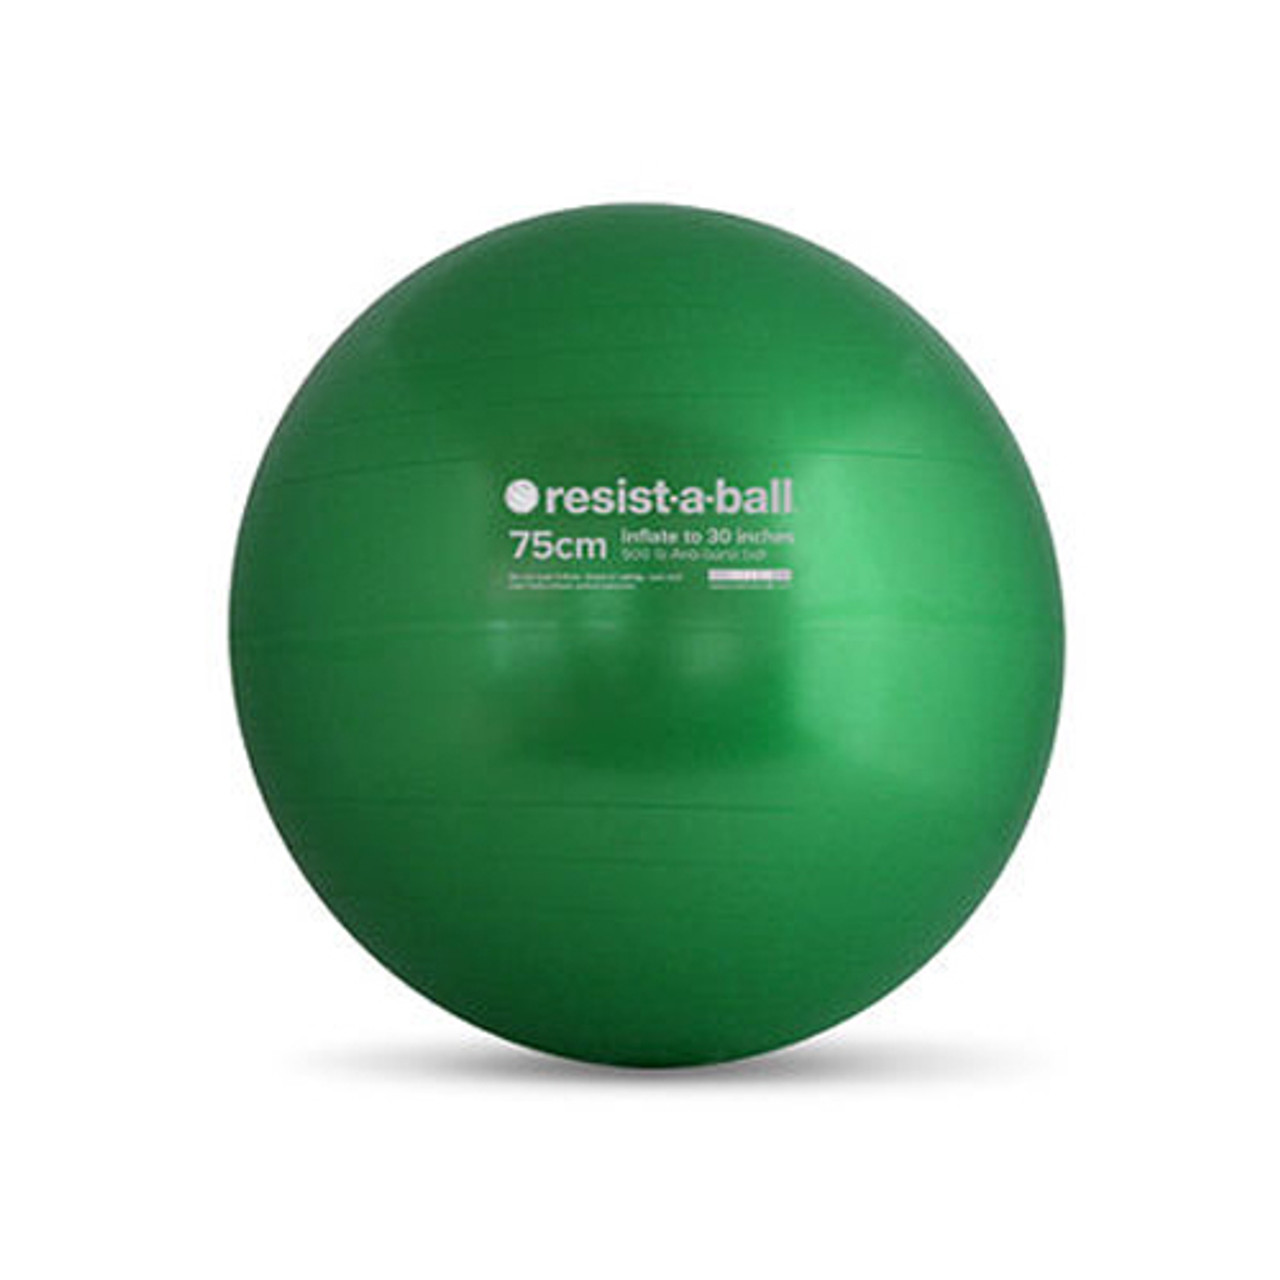 Swiss Ball Pro - 75cm/30 Swiss Ball Pro, green - fitness workout